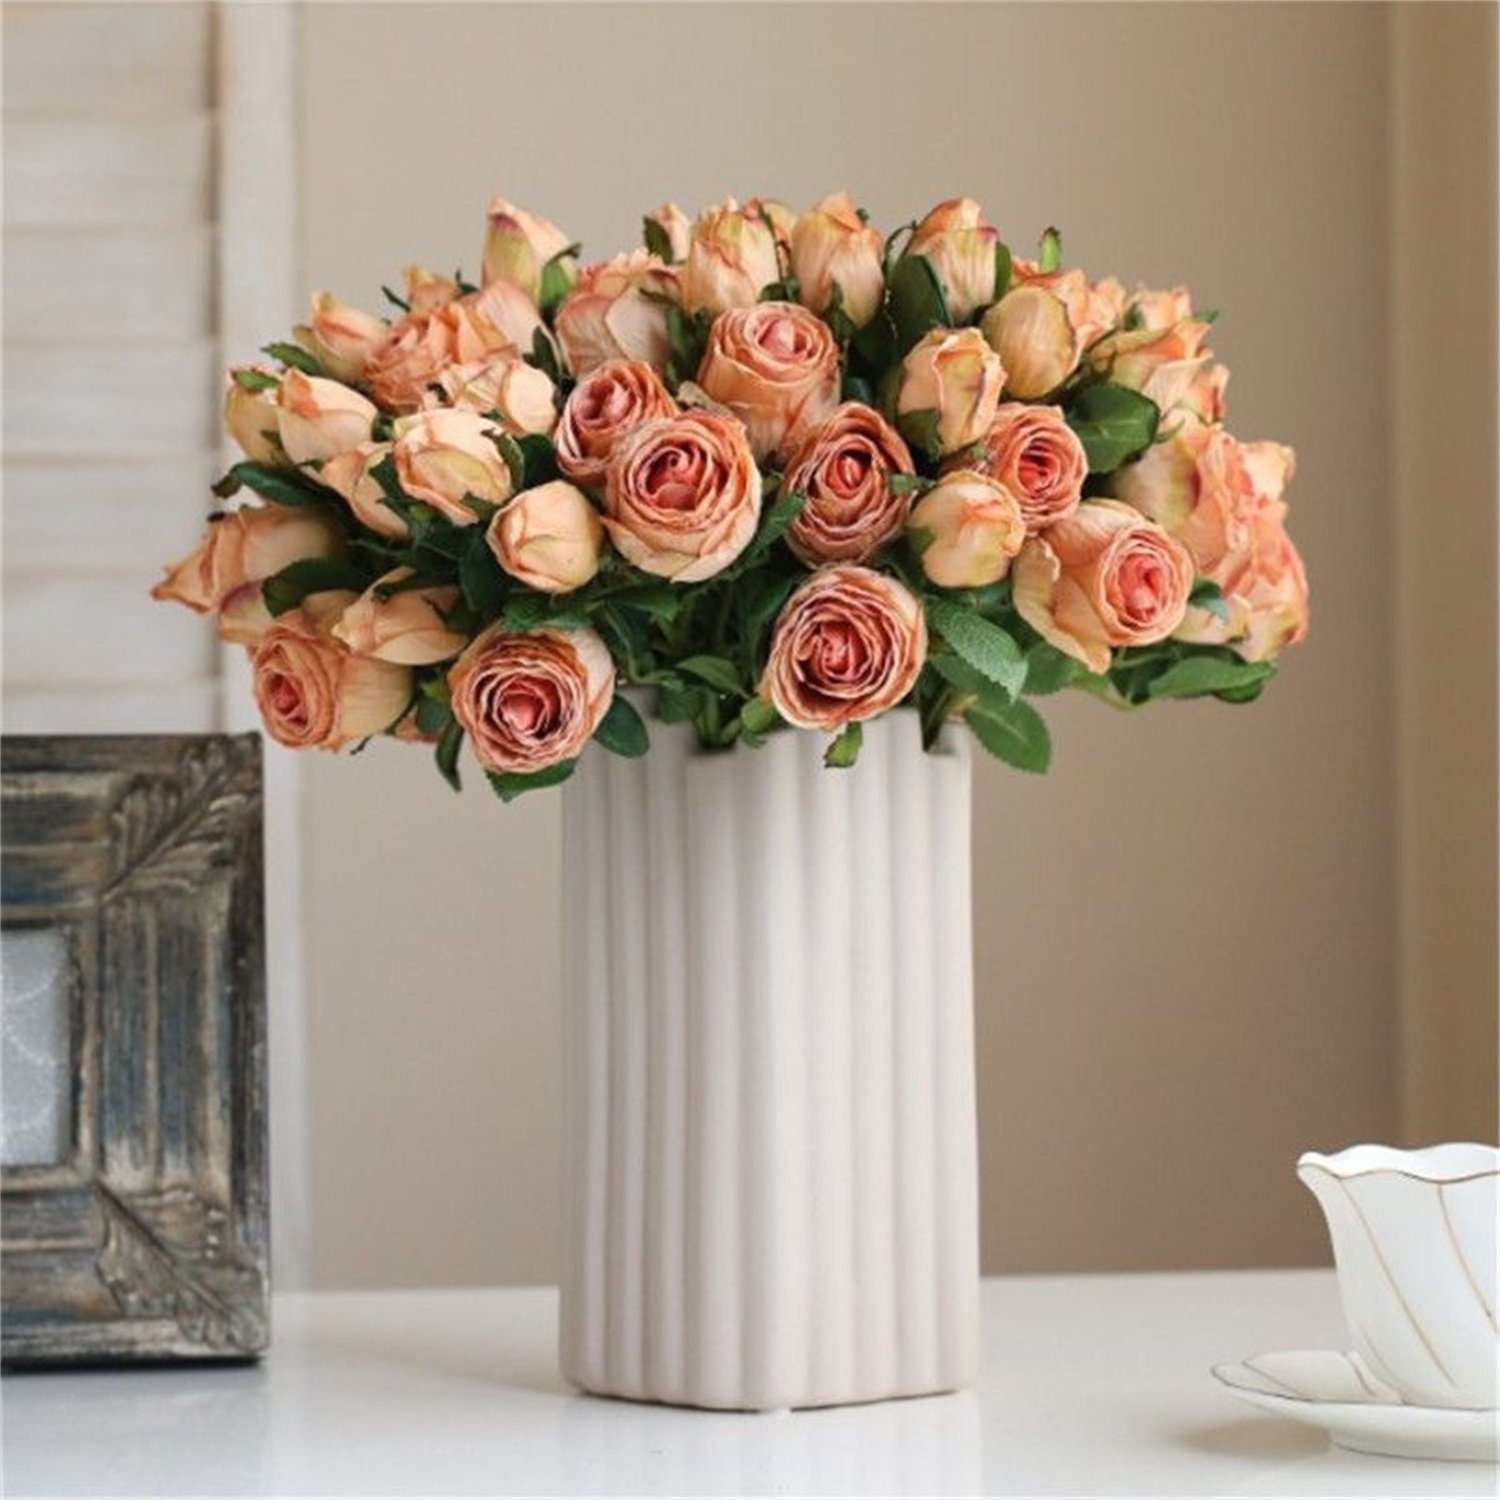 Rand Trockenblumen, 6PCS Bouquet, Trockenblume Rose autolock orange verbrannt Simulation Vintage